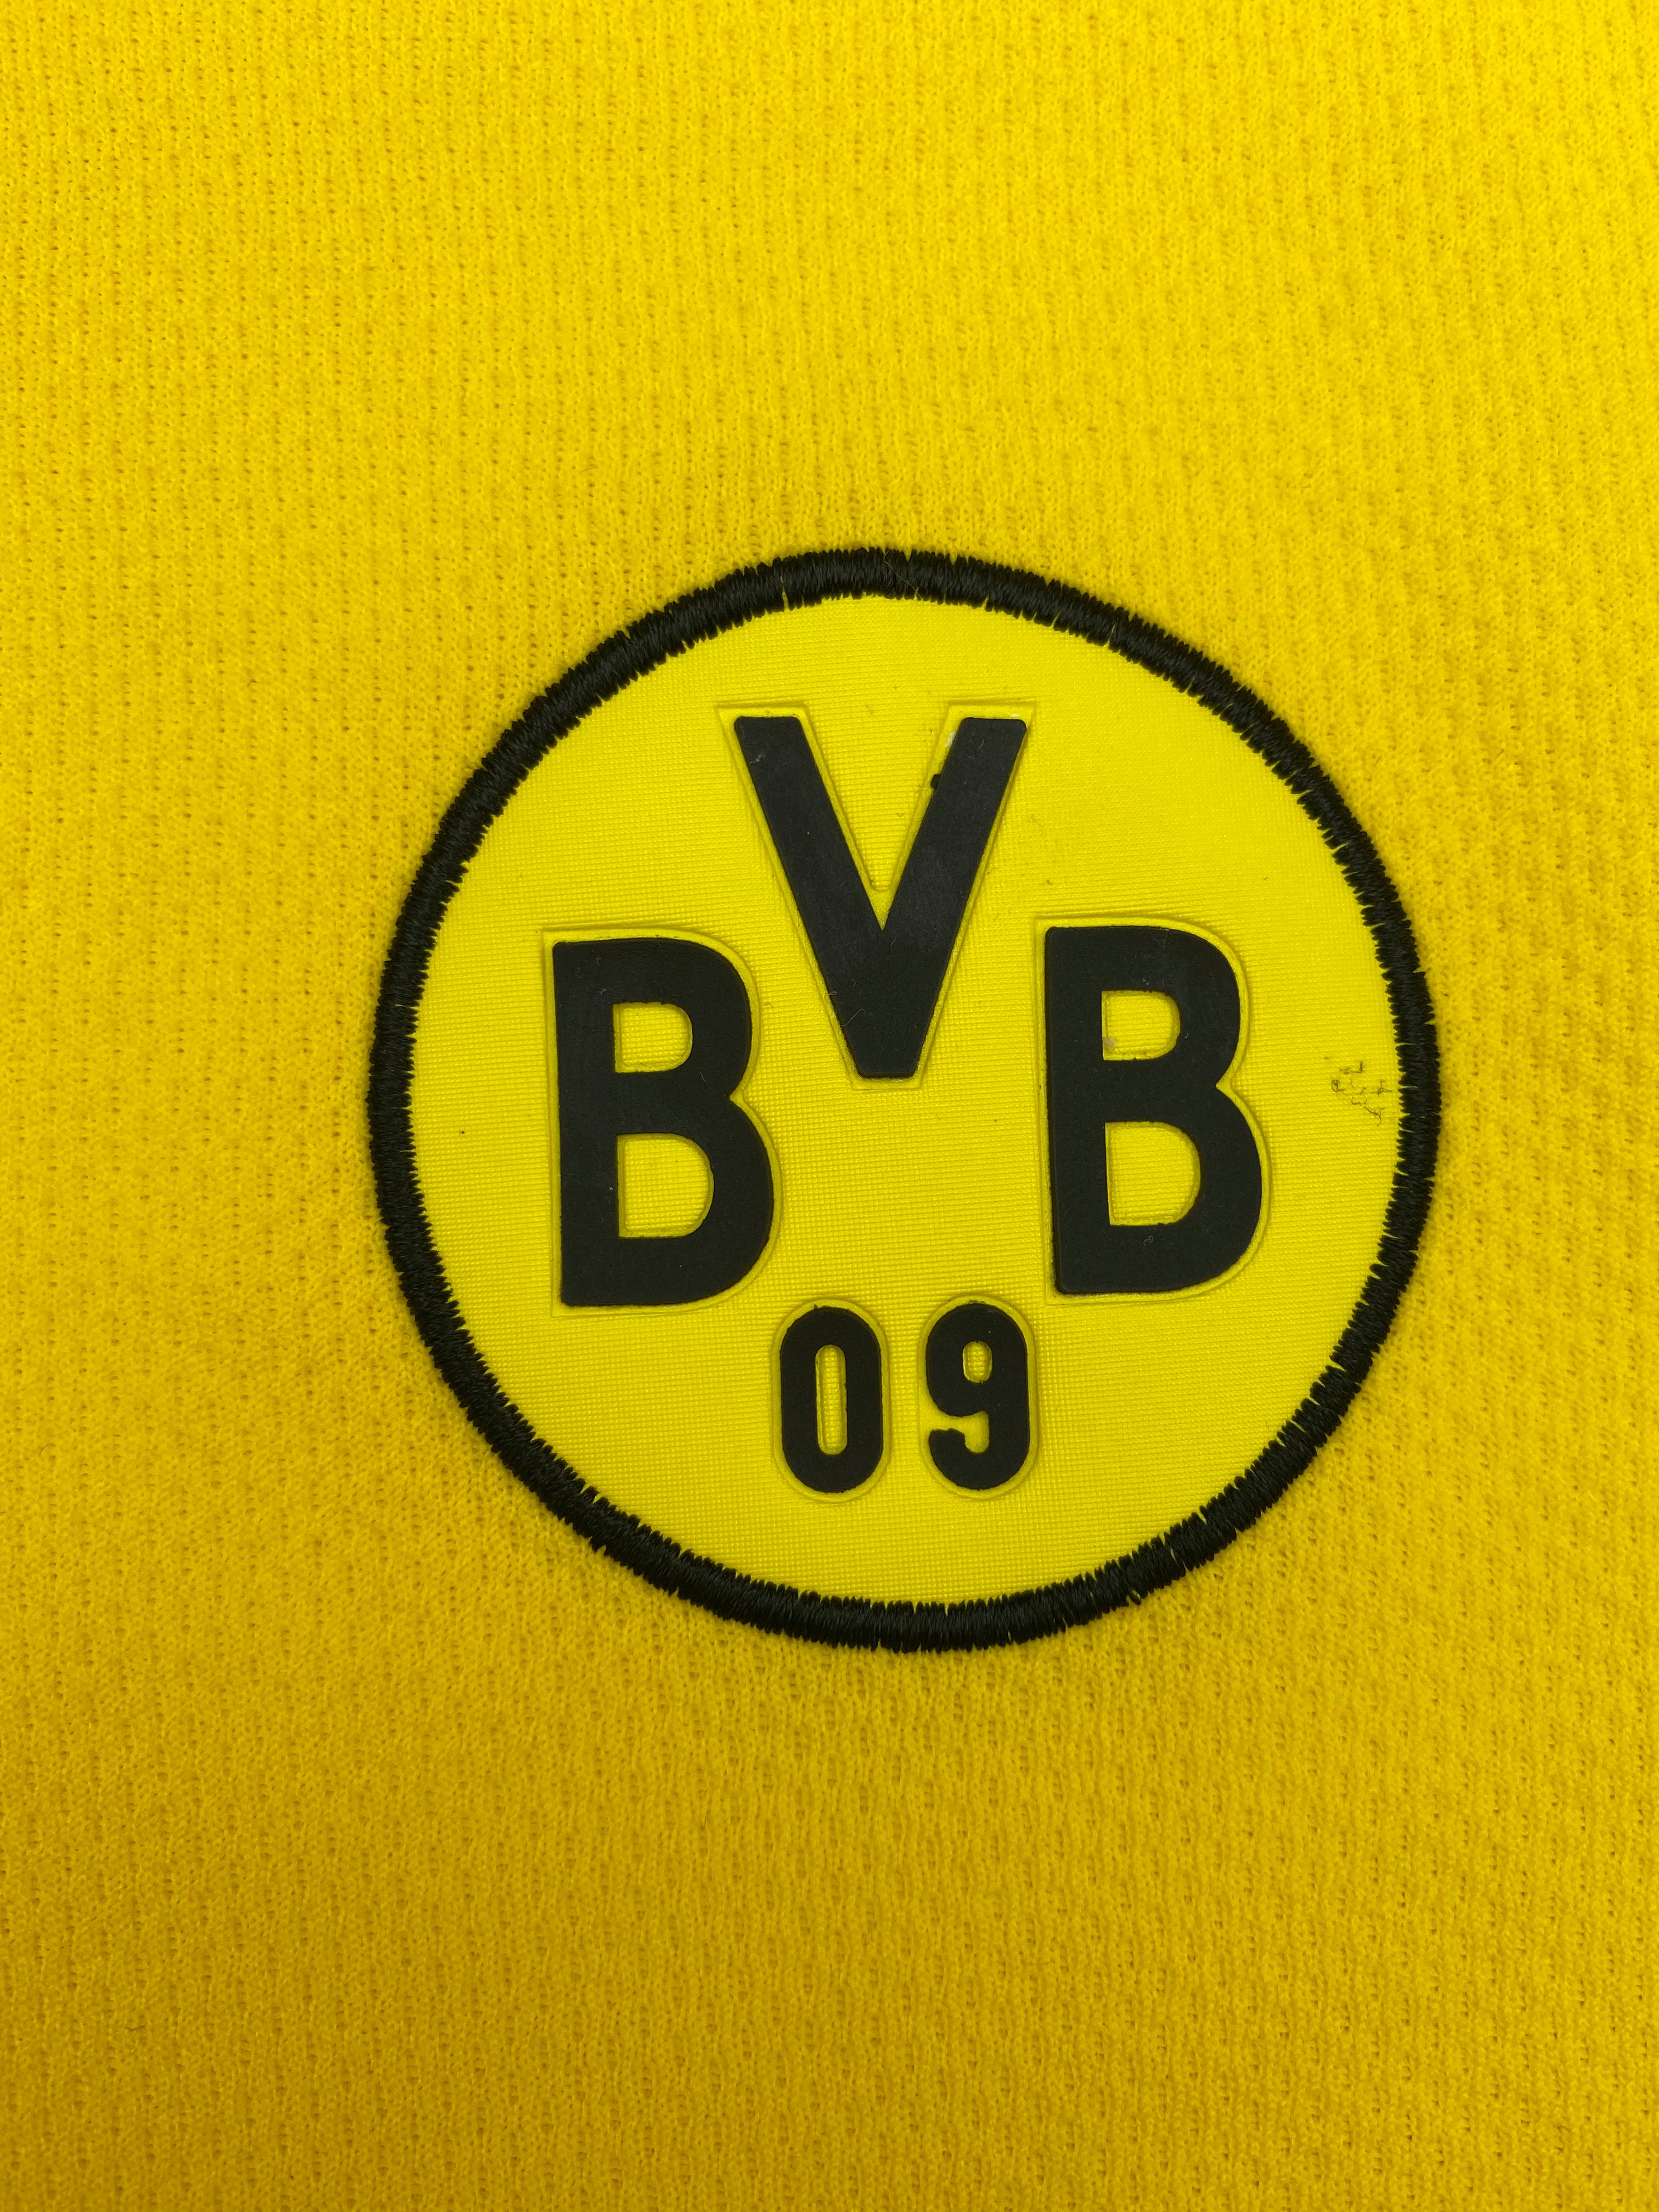 2001/02 Borussia Dortmund L/S European Home Shirt (XXL) 9/10